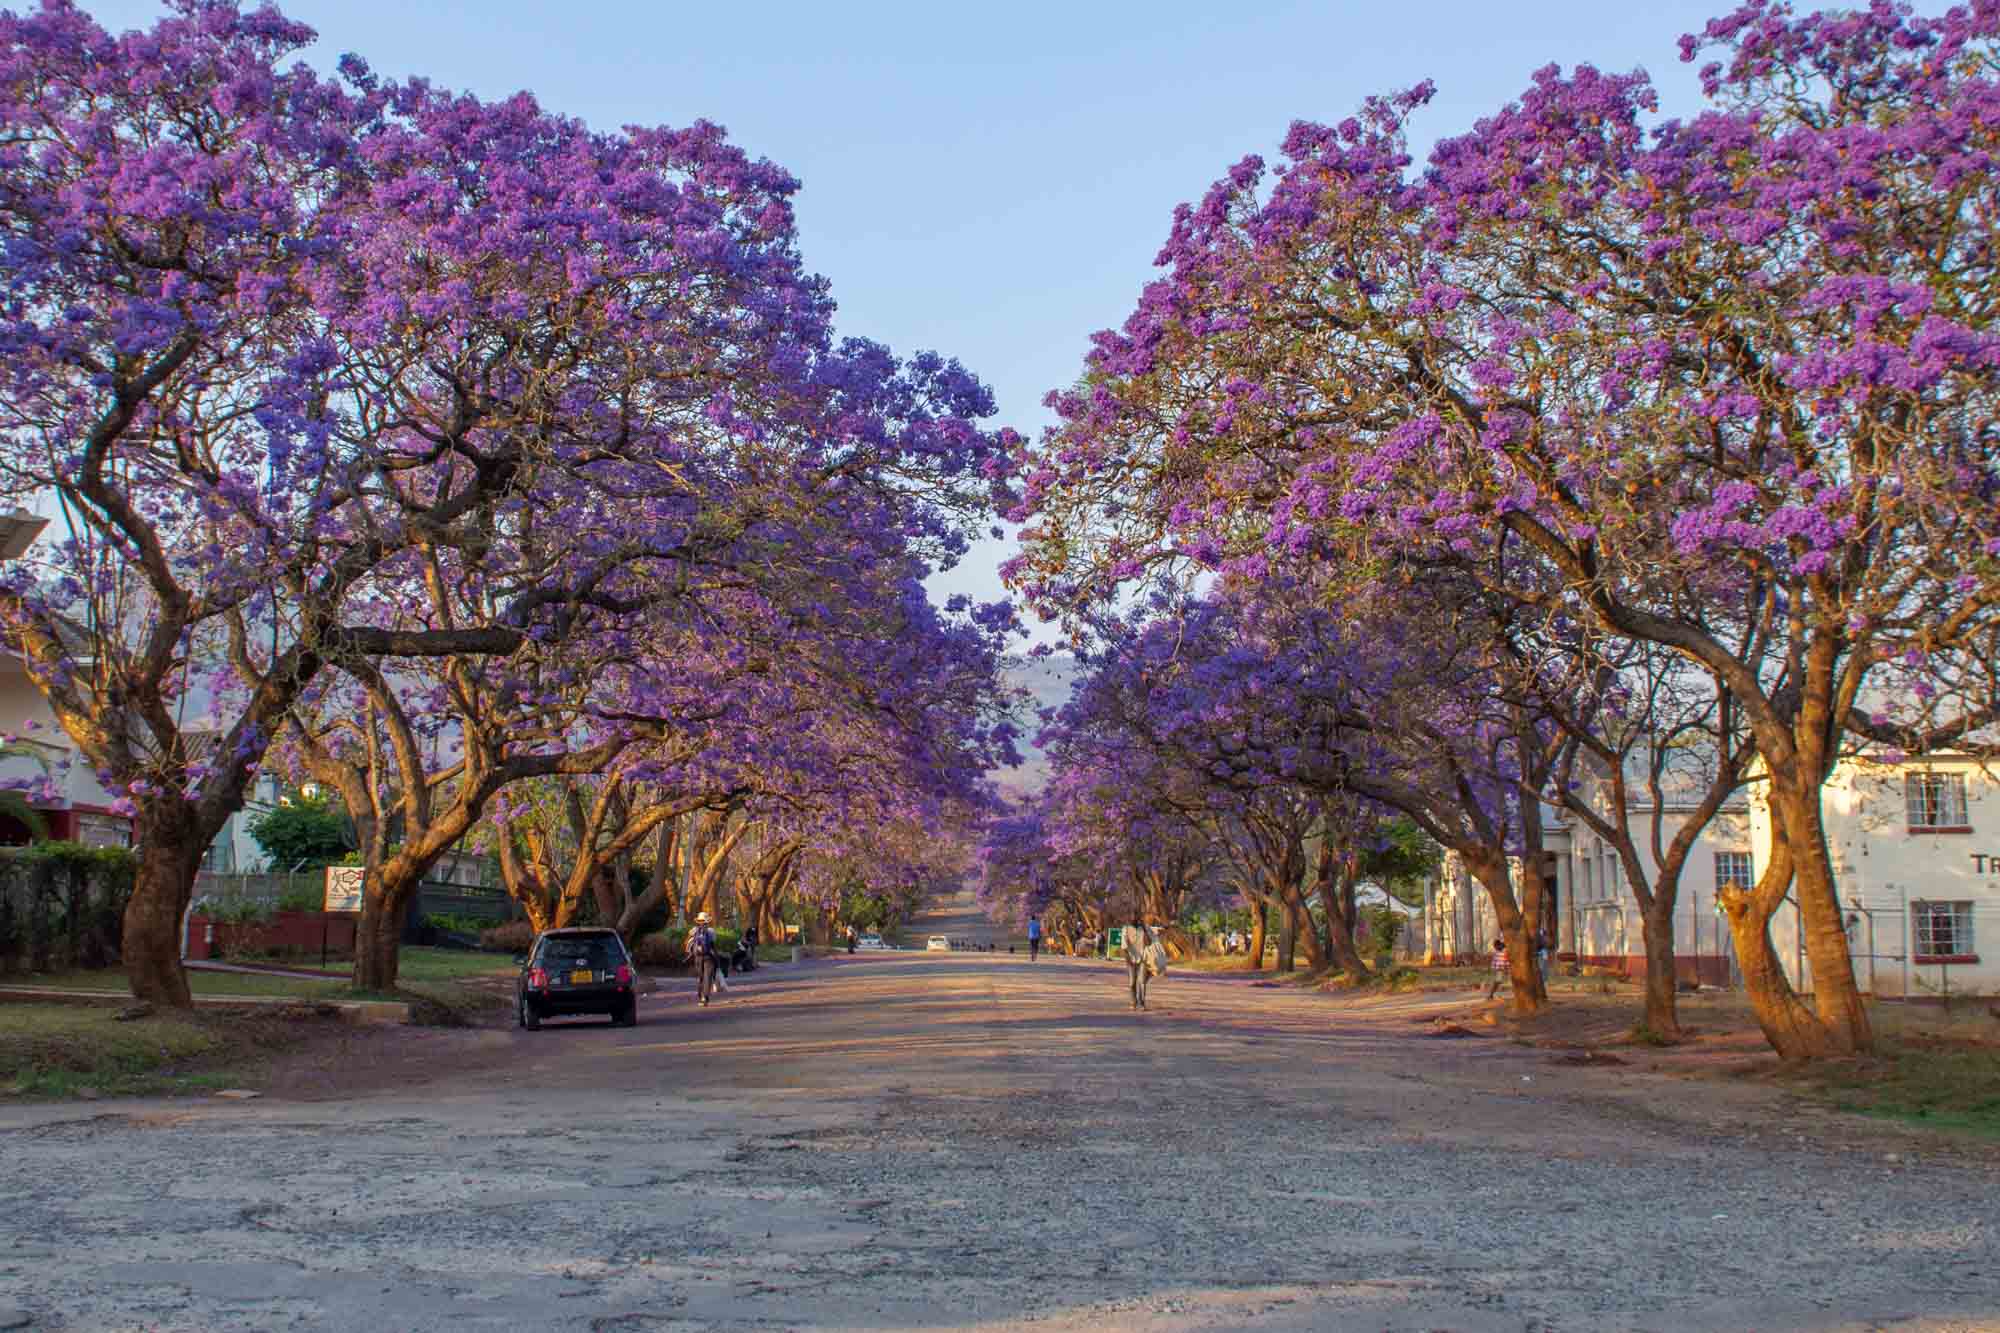 Avenue filled with Jacaranda trees